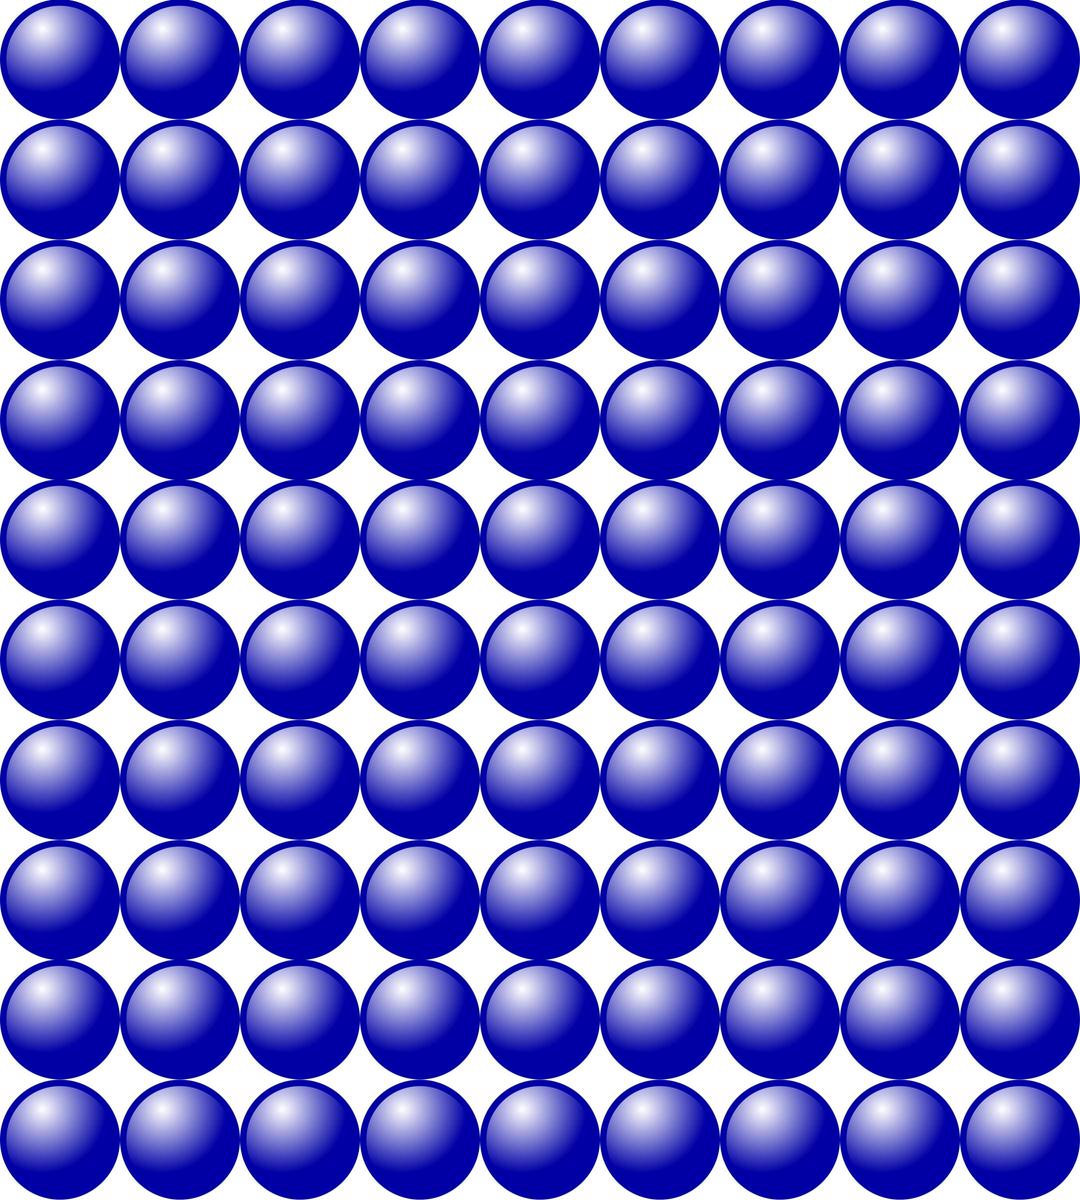 Beads quantitative picture for multiplication 10x9 png transparent